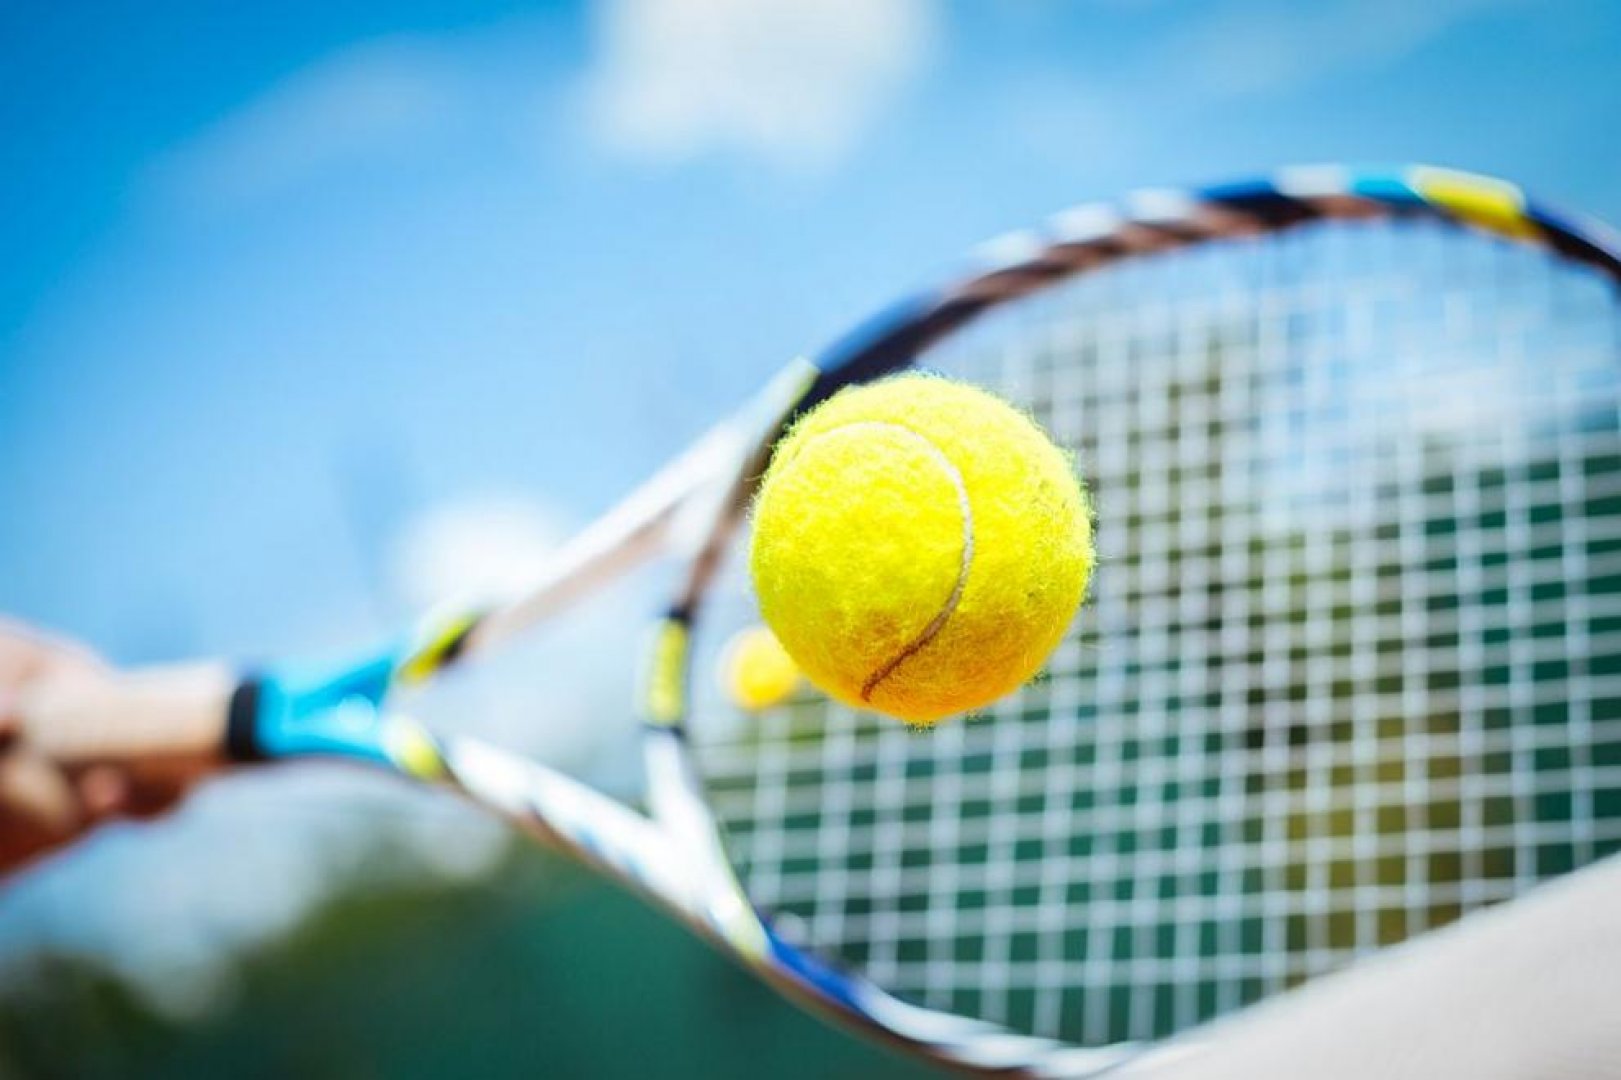 Обявиха промени в правилата за тенис тренировки - E-Burgas.com